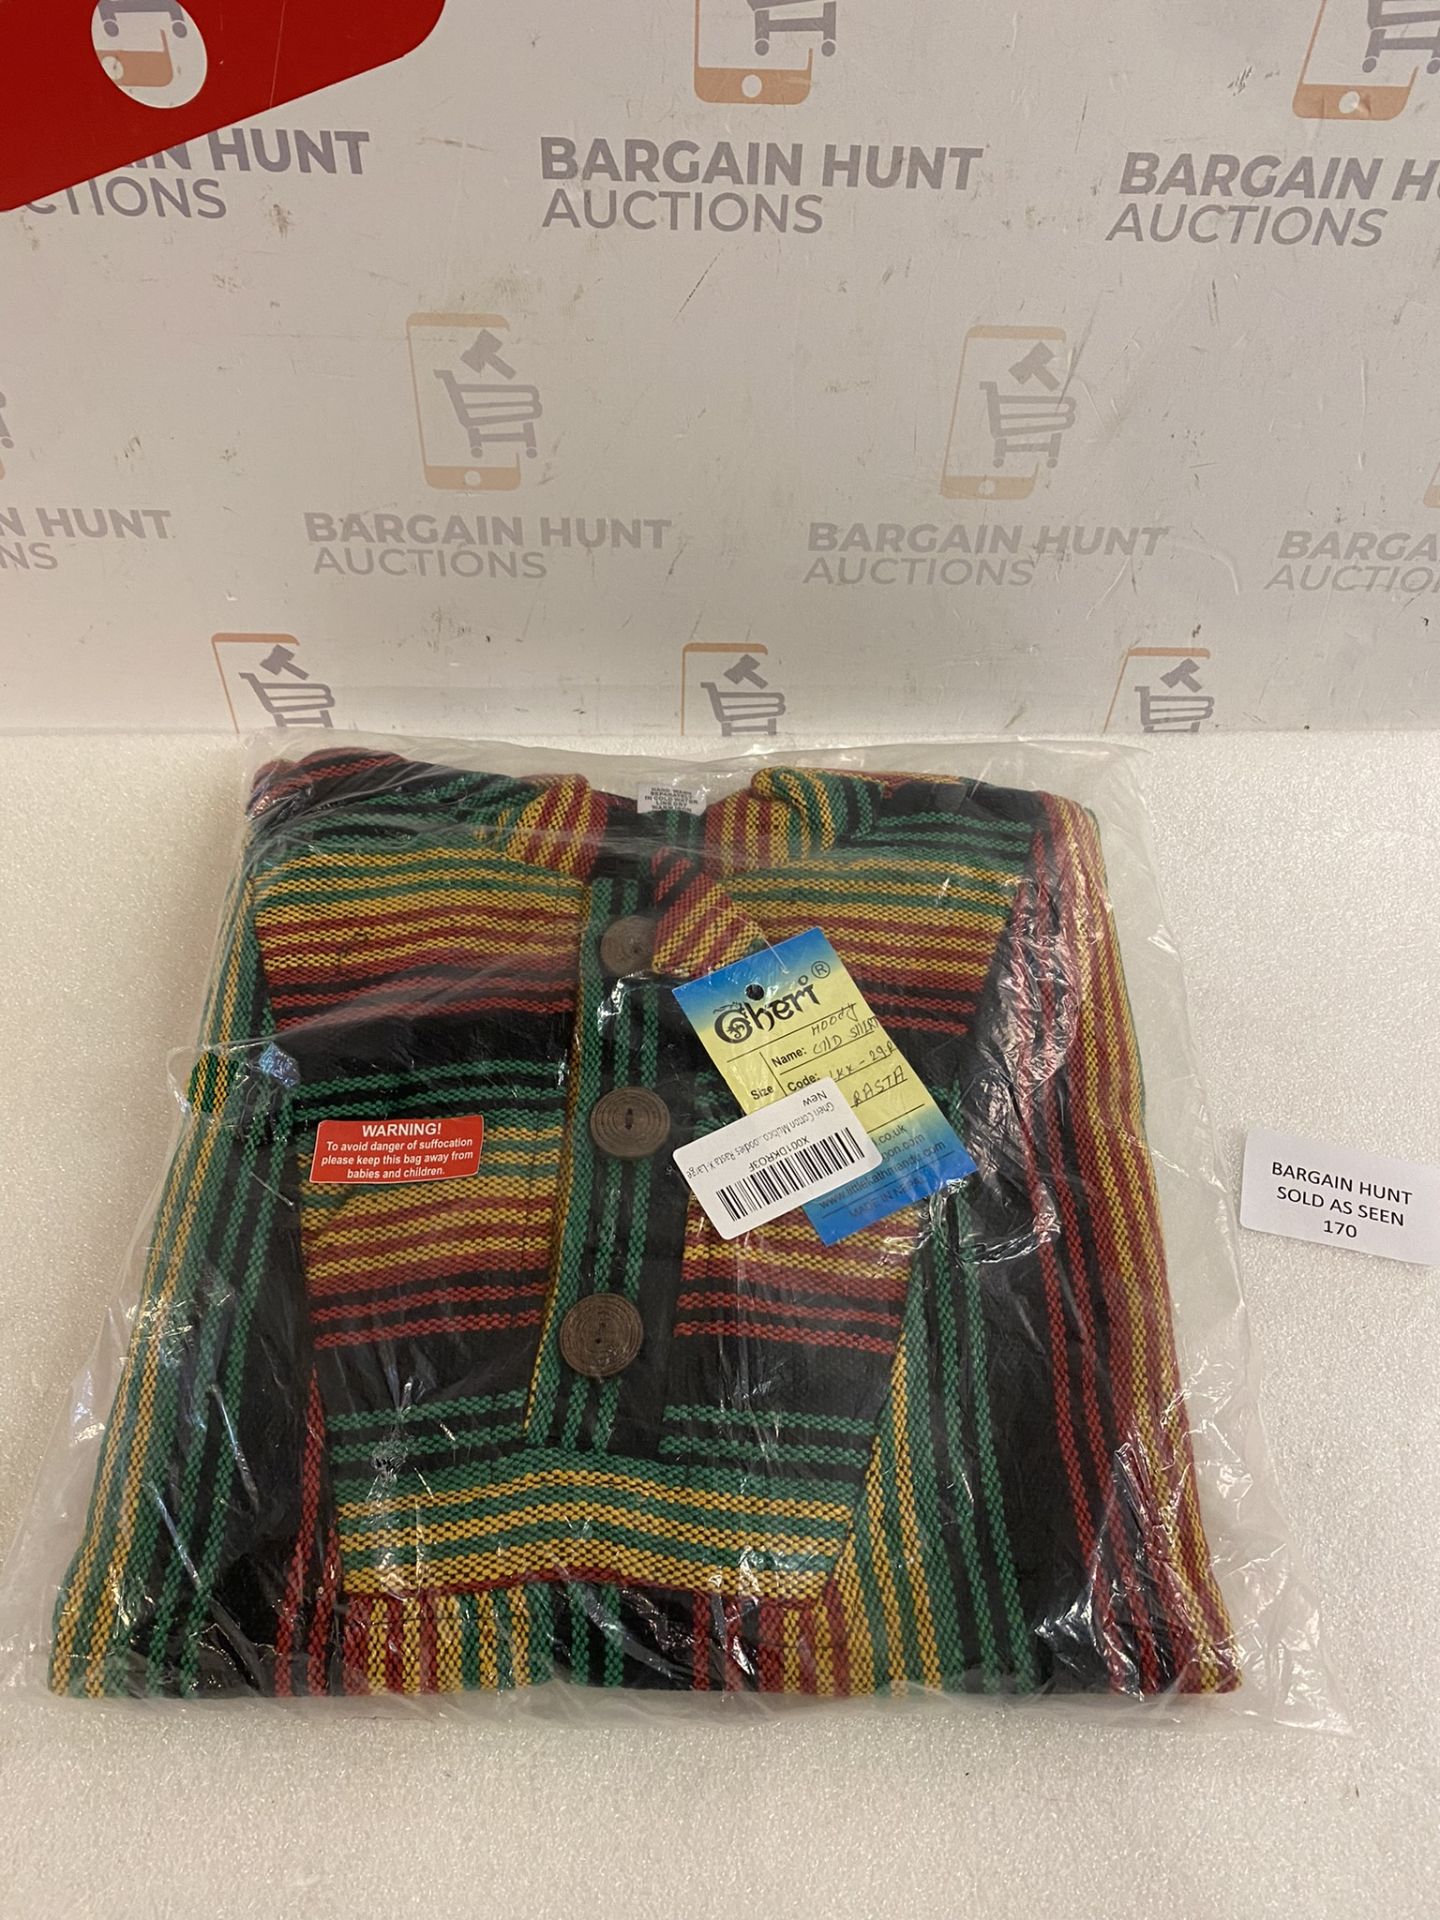 RRP £34.99 Gheri Cotton Multicoloured Striped Ethnic Baja Hoodies Rasta, XL